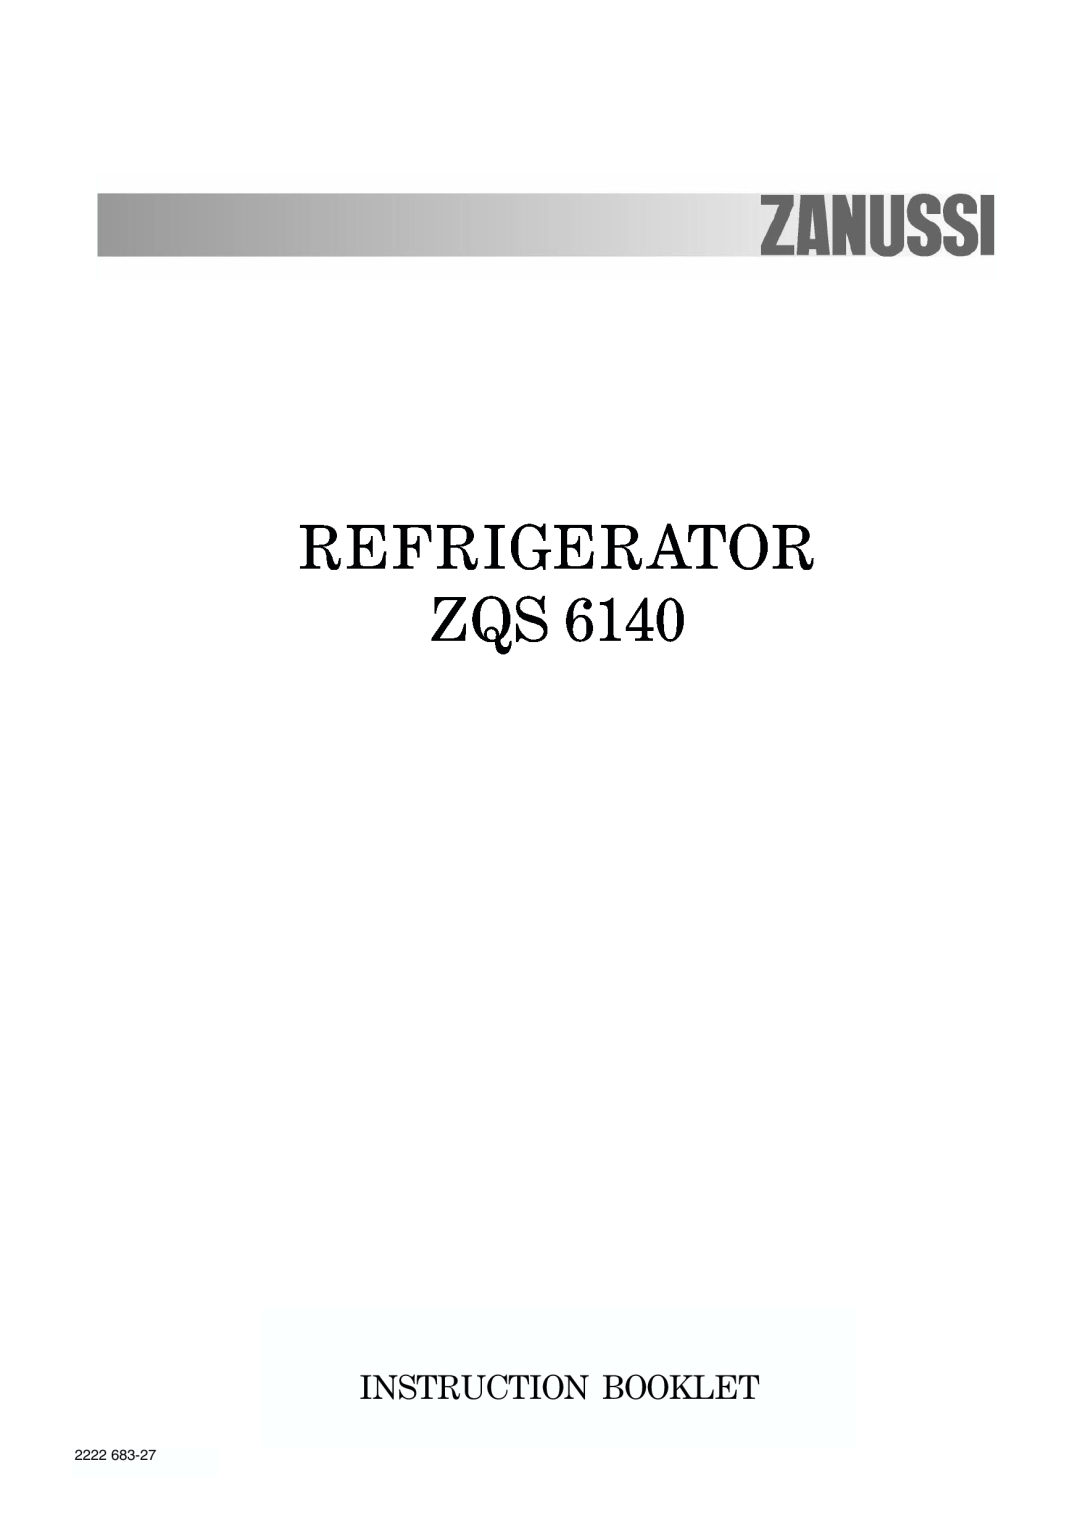 Zanussi ZQS 6140 manual Refrigerator Zqs, Instruction Booklet, 2222 